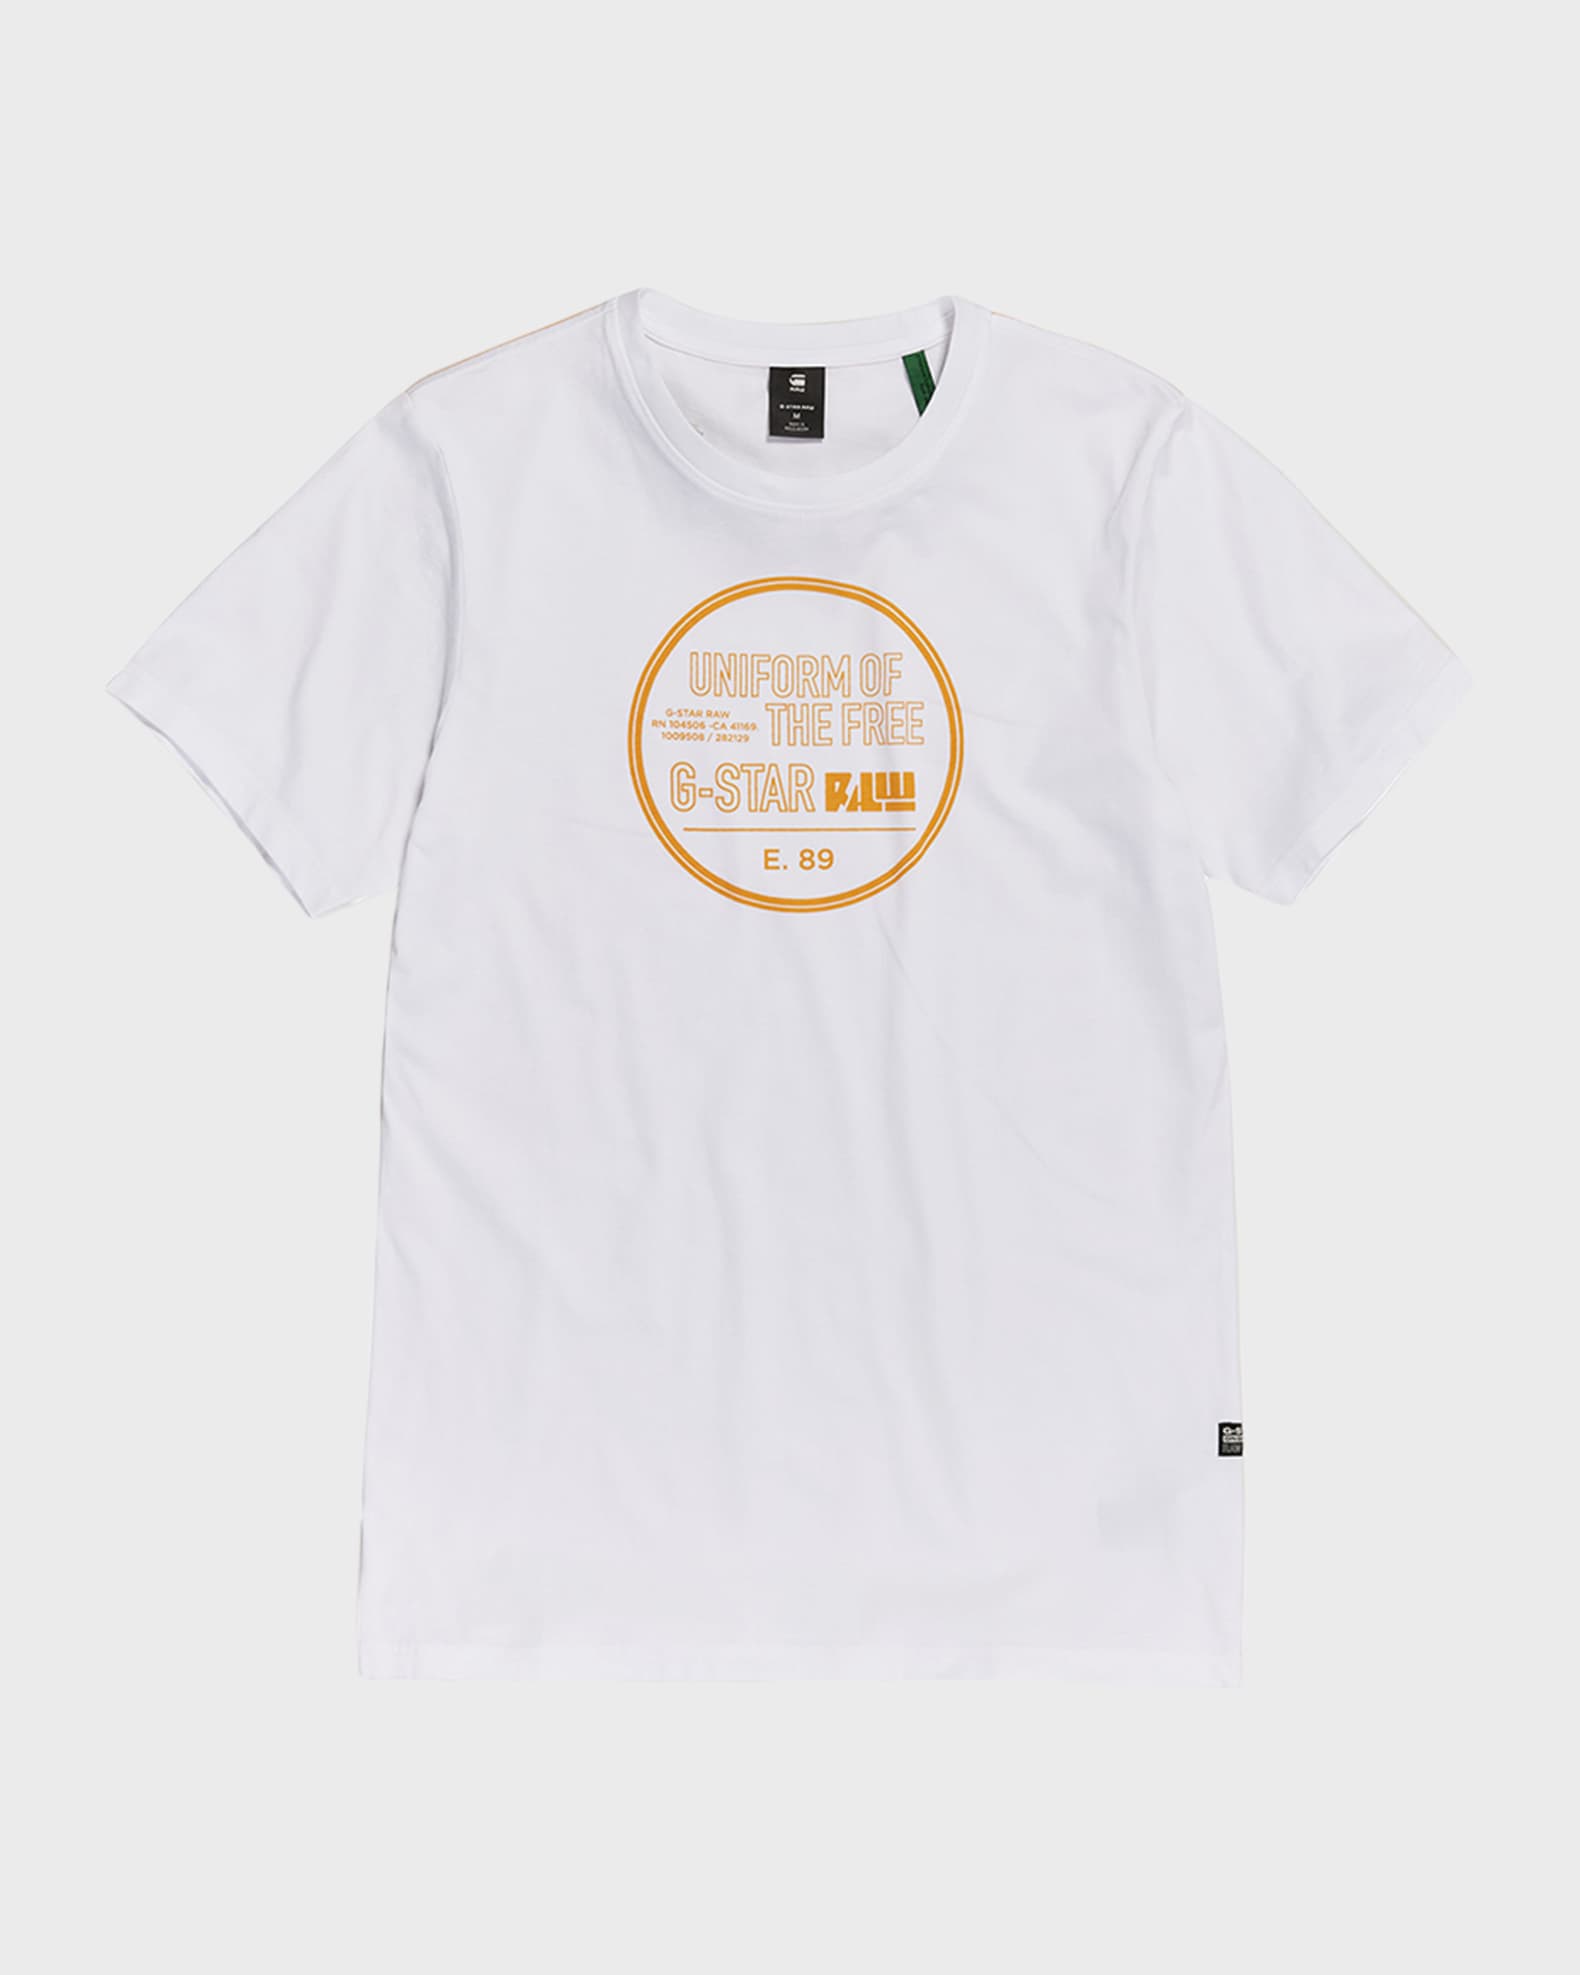 G-STAR RAW Men's Chest Graphic Slim Fit T-Shirt Neiman Marcus